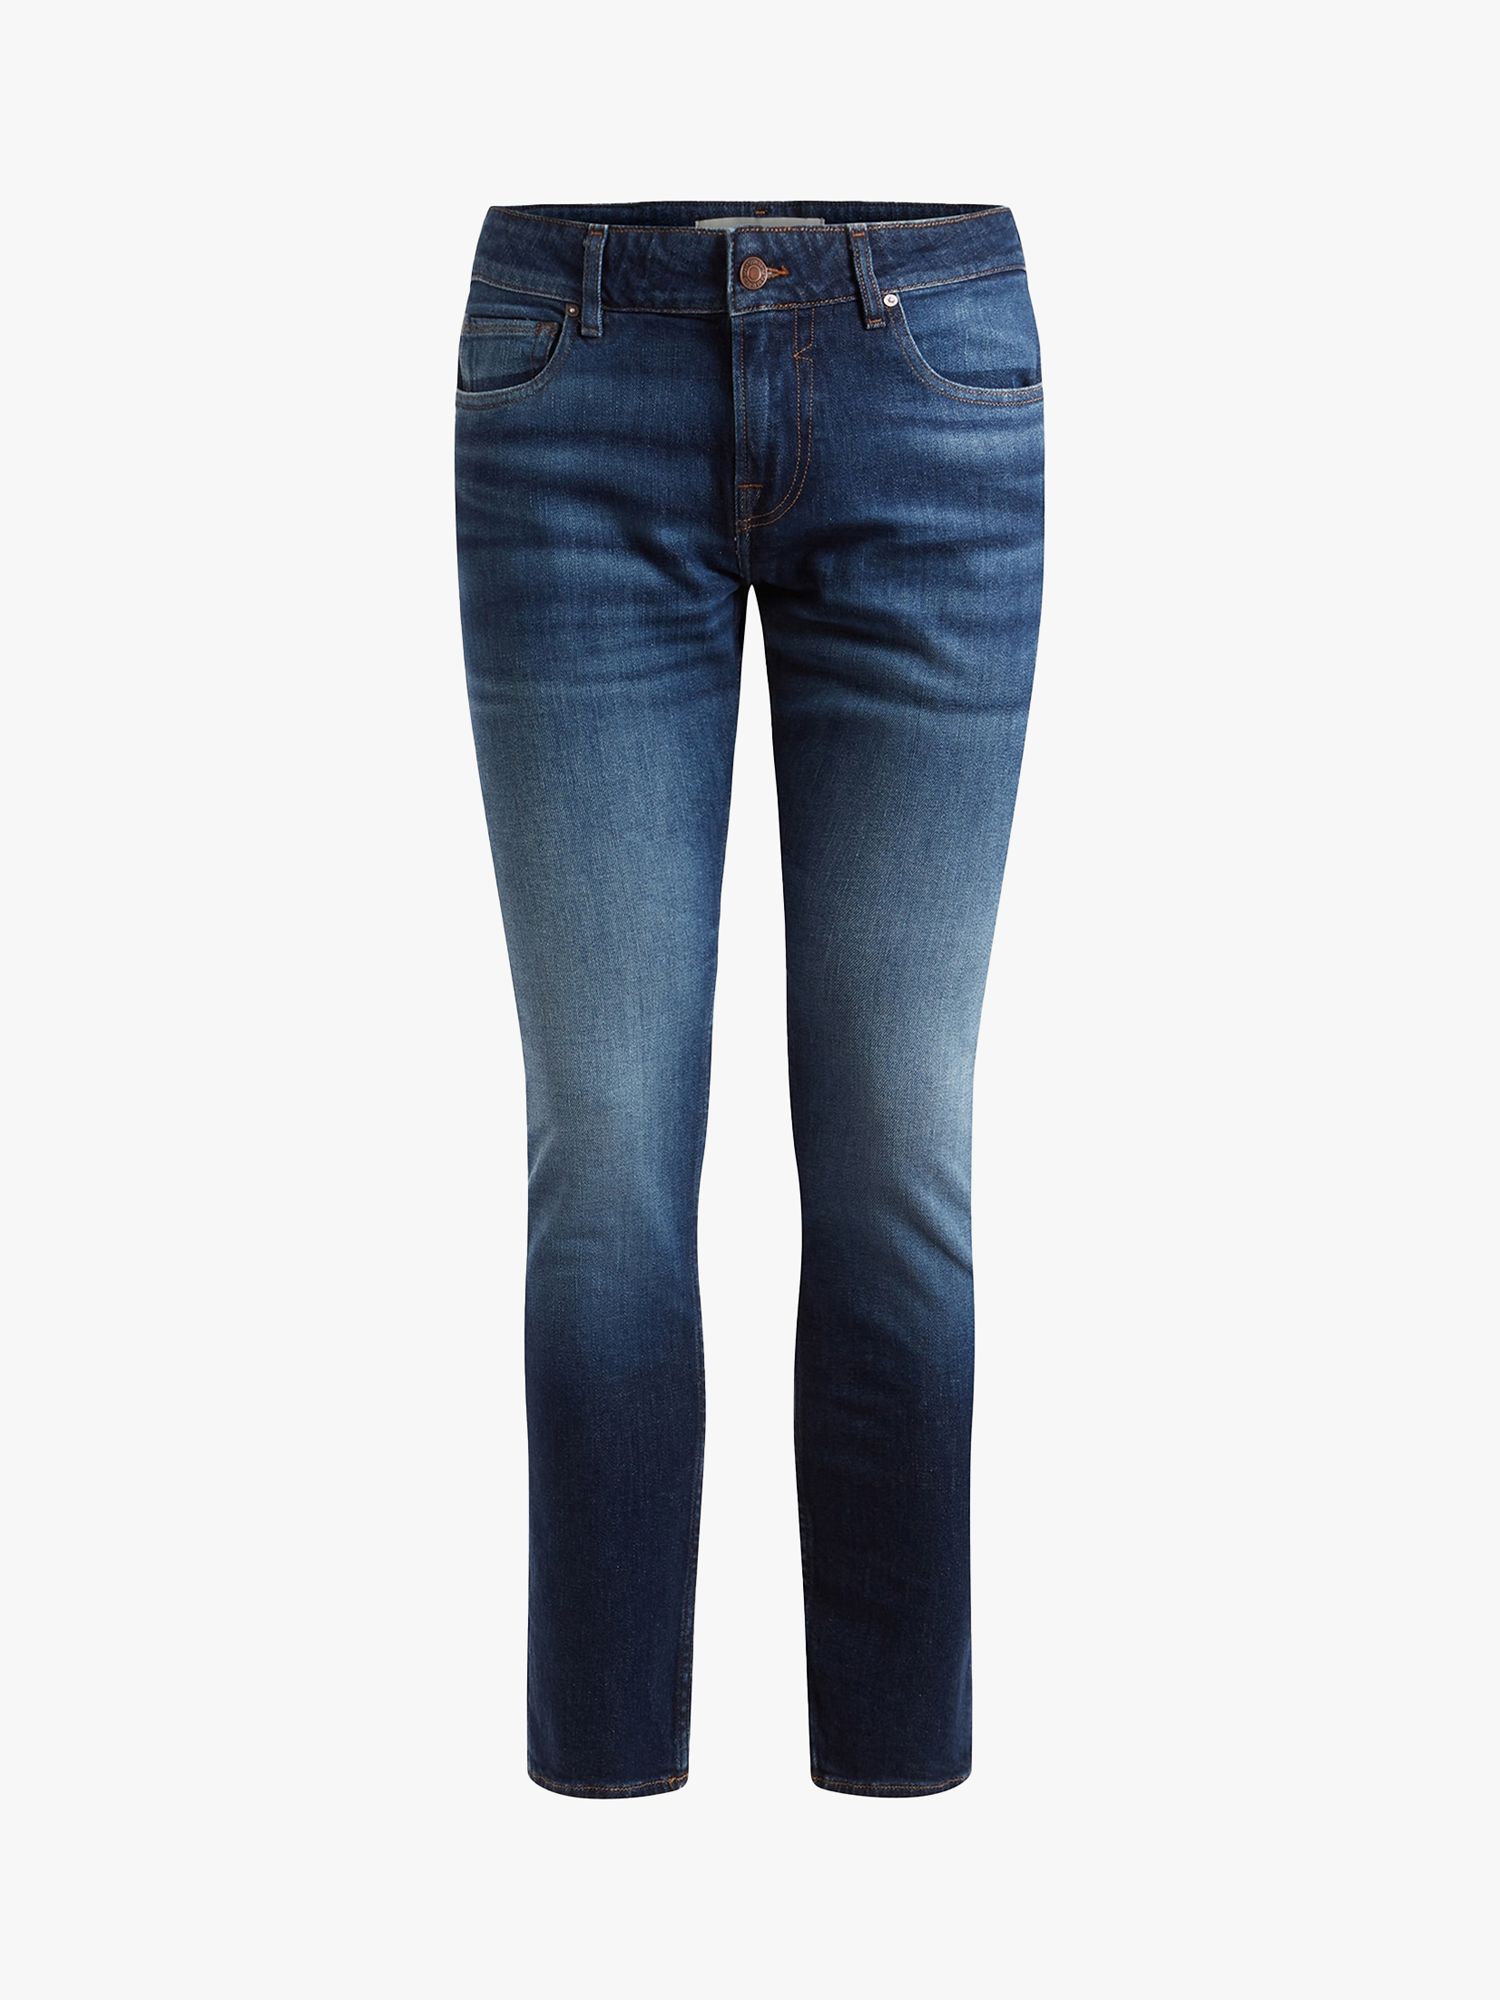 GUESS Miami Skinny Fit Jeans, Carry Dark., W40/L32